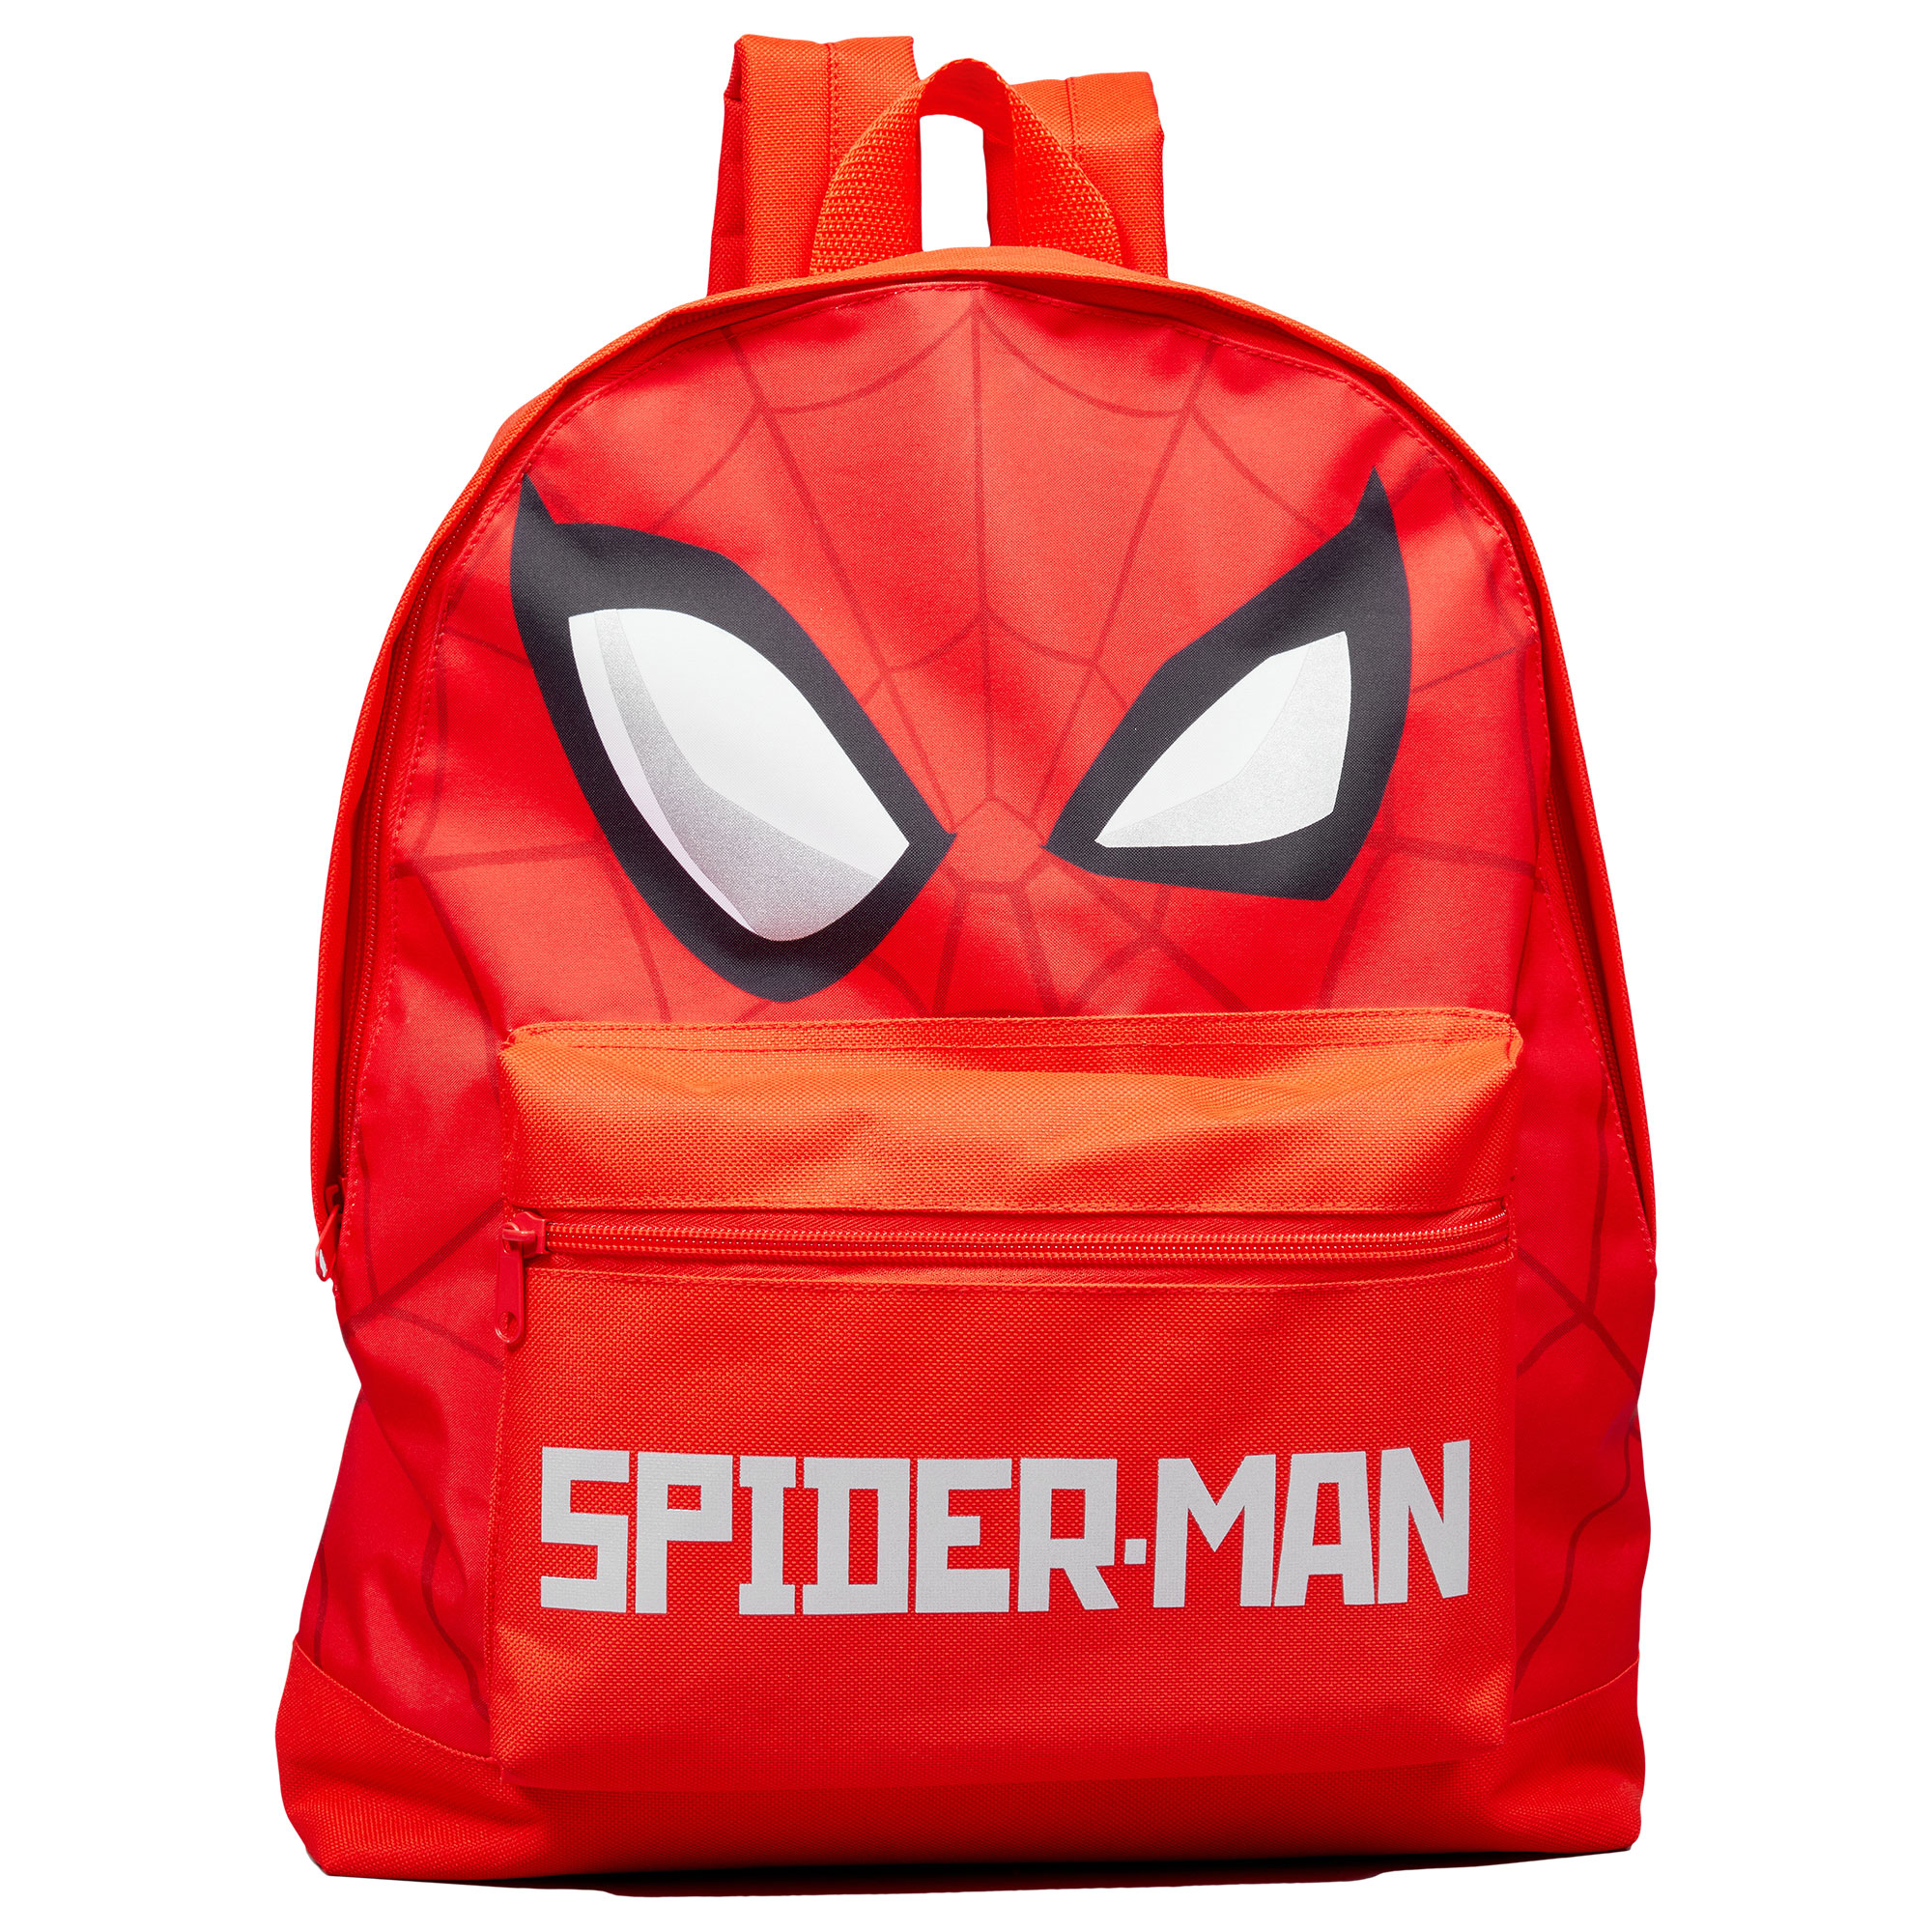 Buy Spider-Man Backpack for GBP 9.74 | Card Factory UK